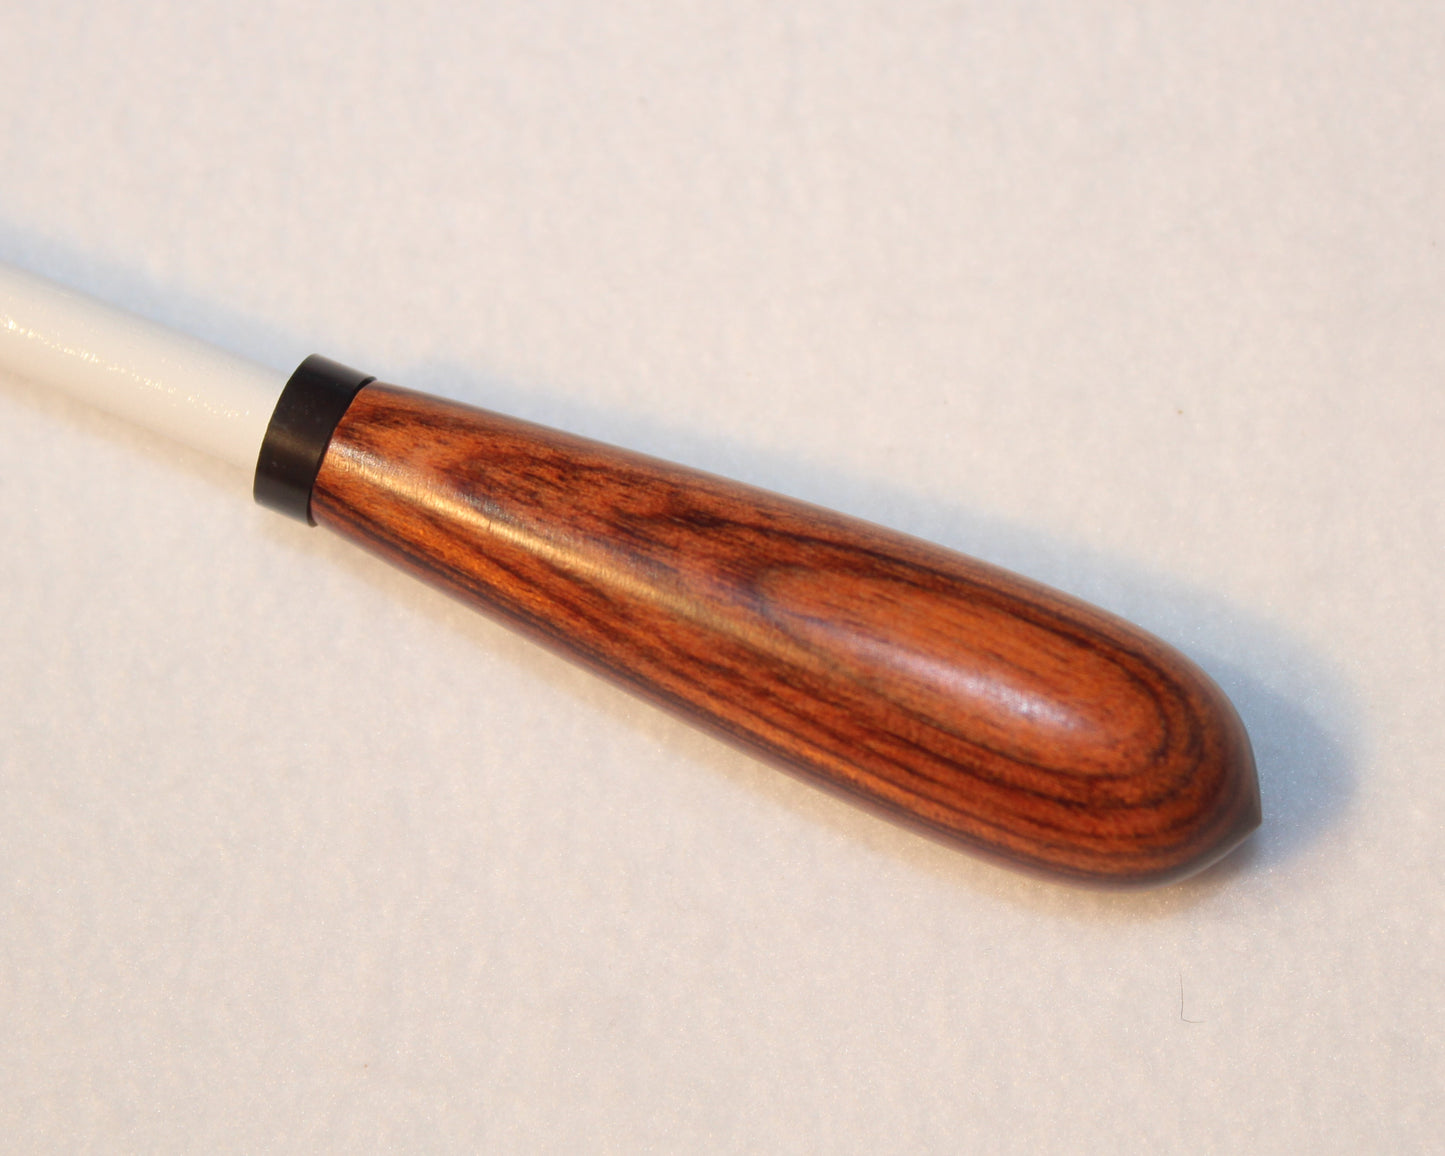 Imprinted Wood Handle Conducting Batons (Minimum order of 10)